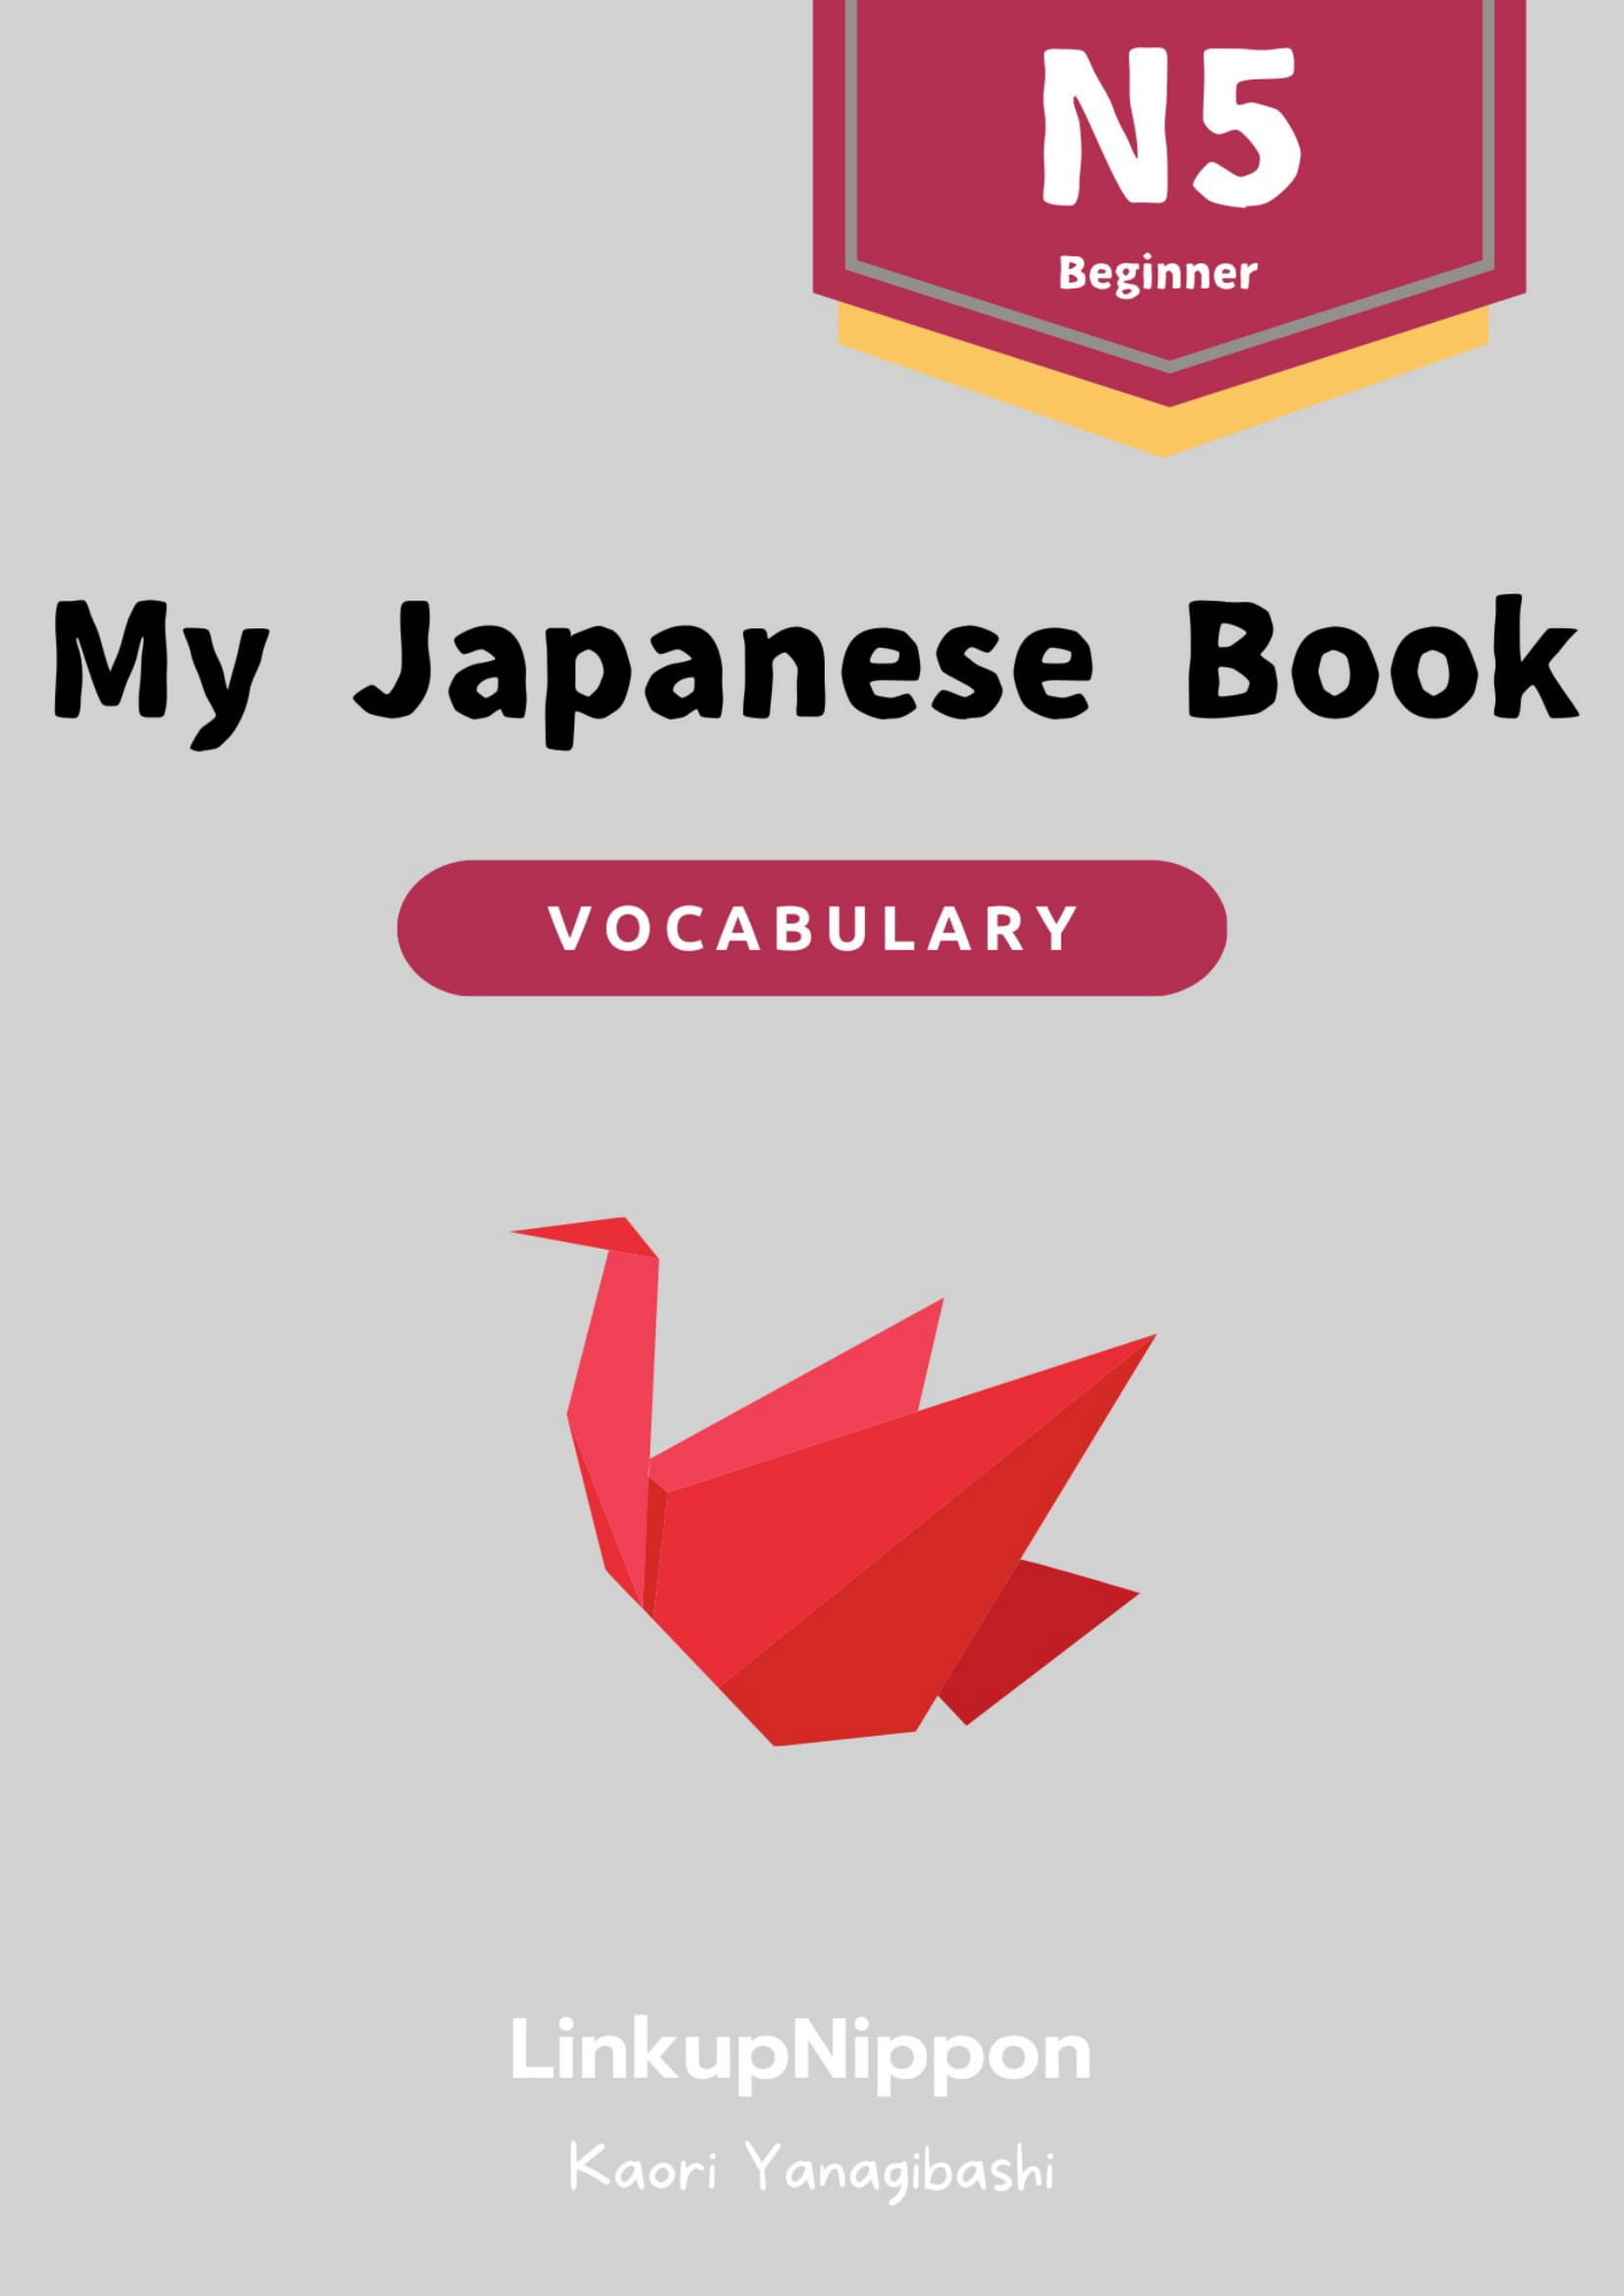 cover_MyJapaneseBook_Vocabulary_N5_v0.1.jpg